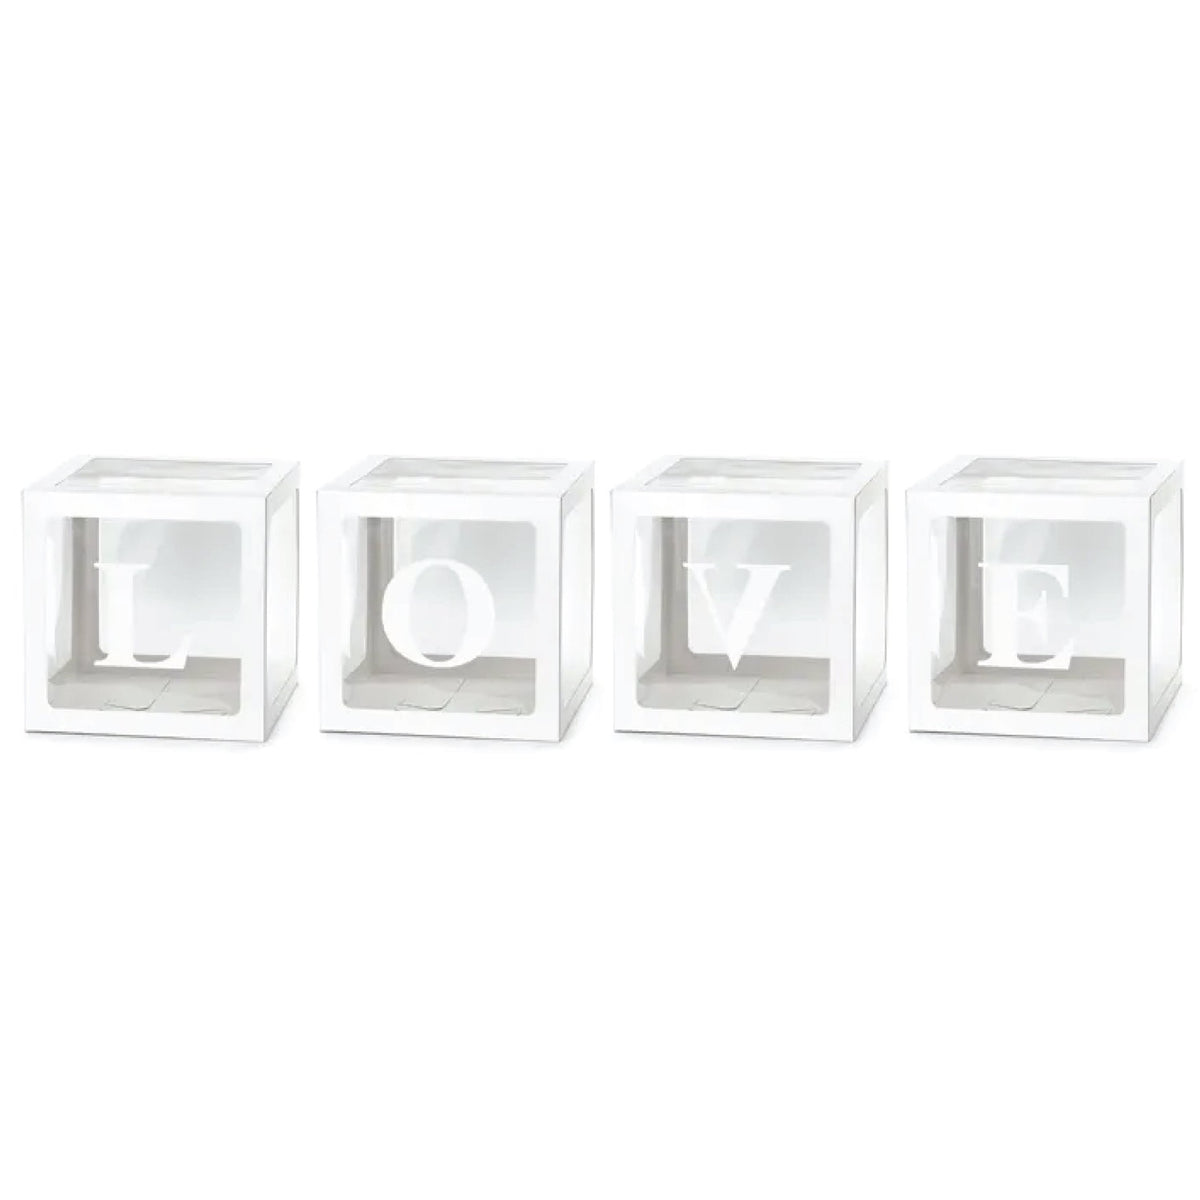 White Pop-Up Love Block Decorations 4ct